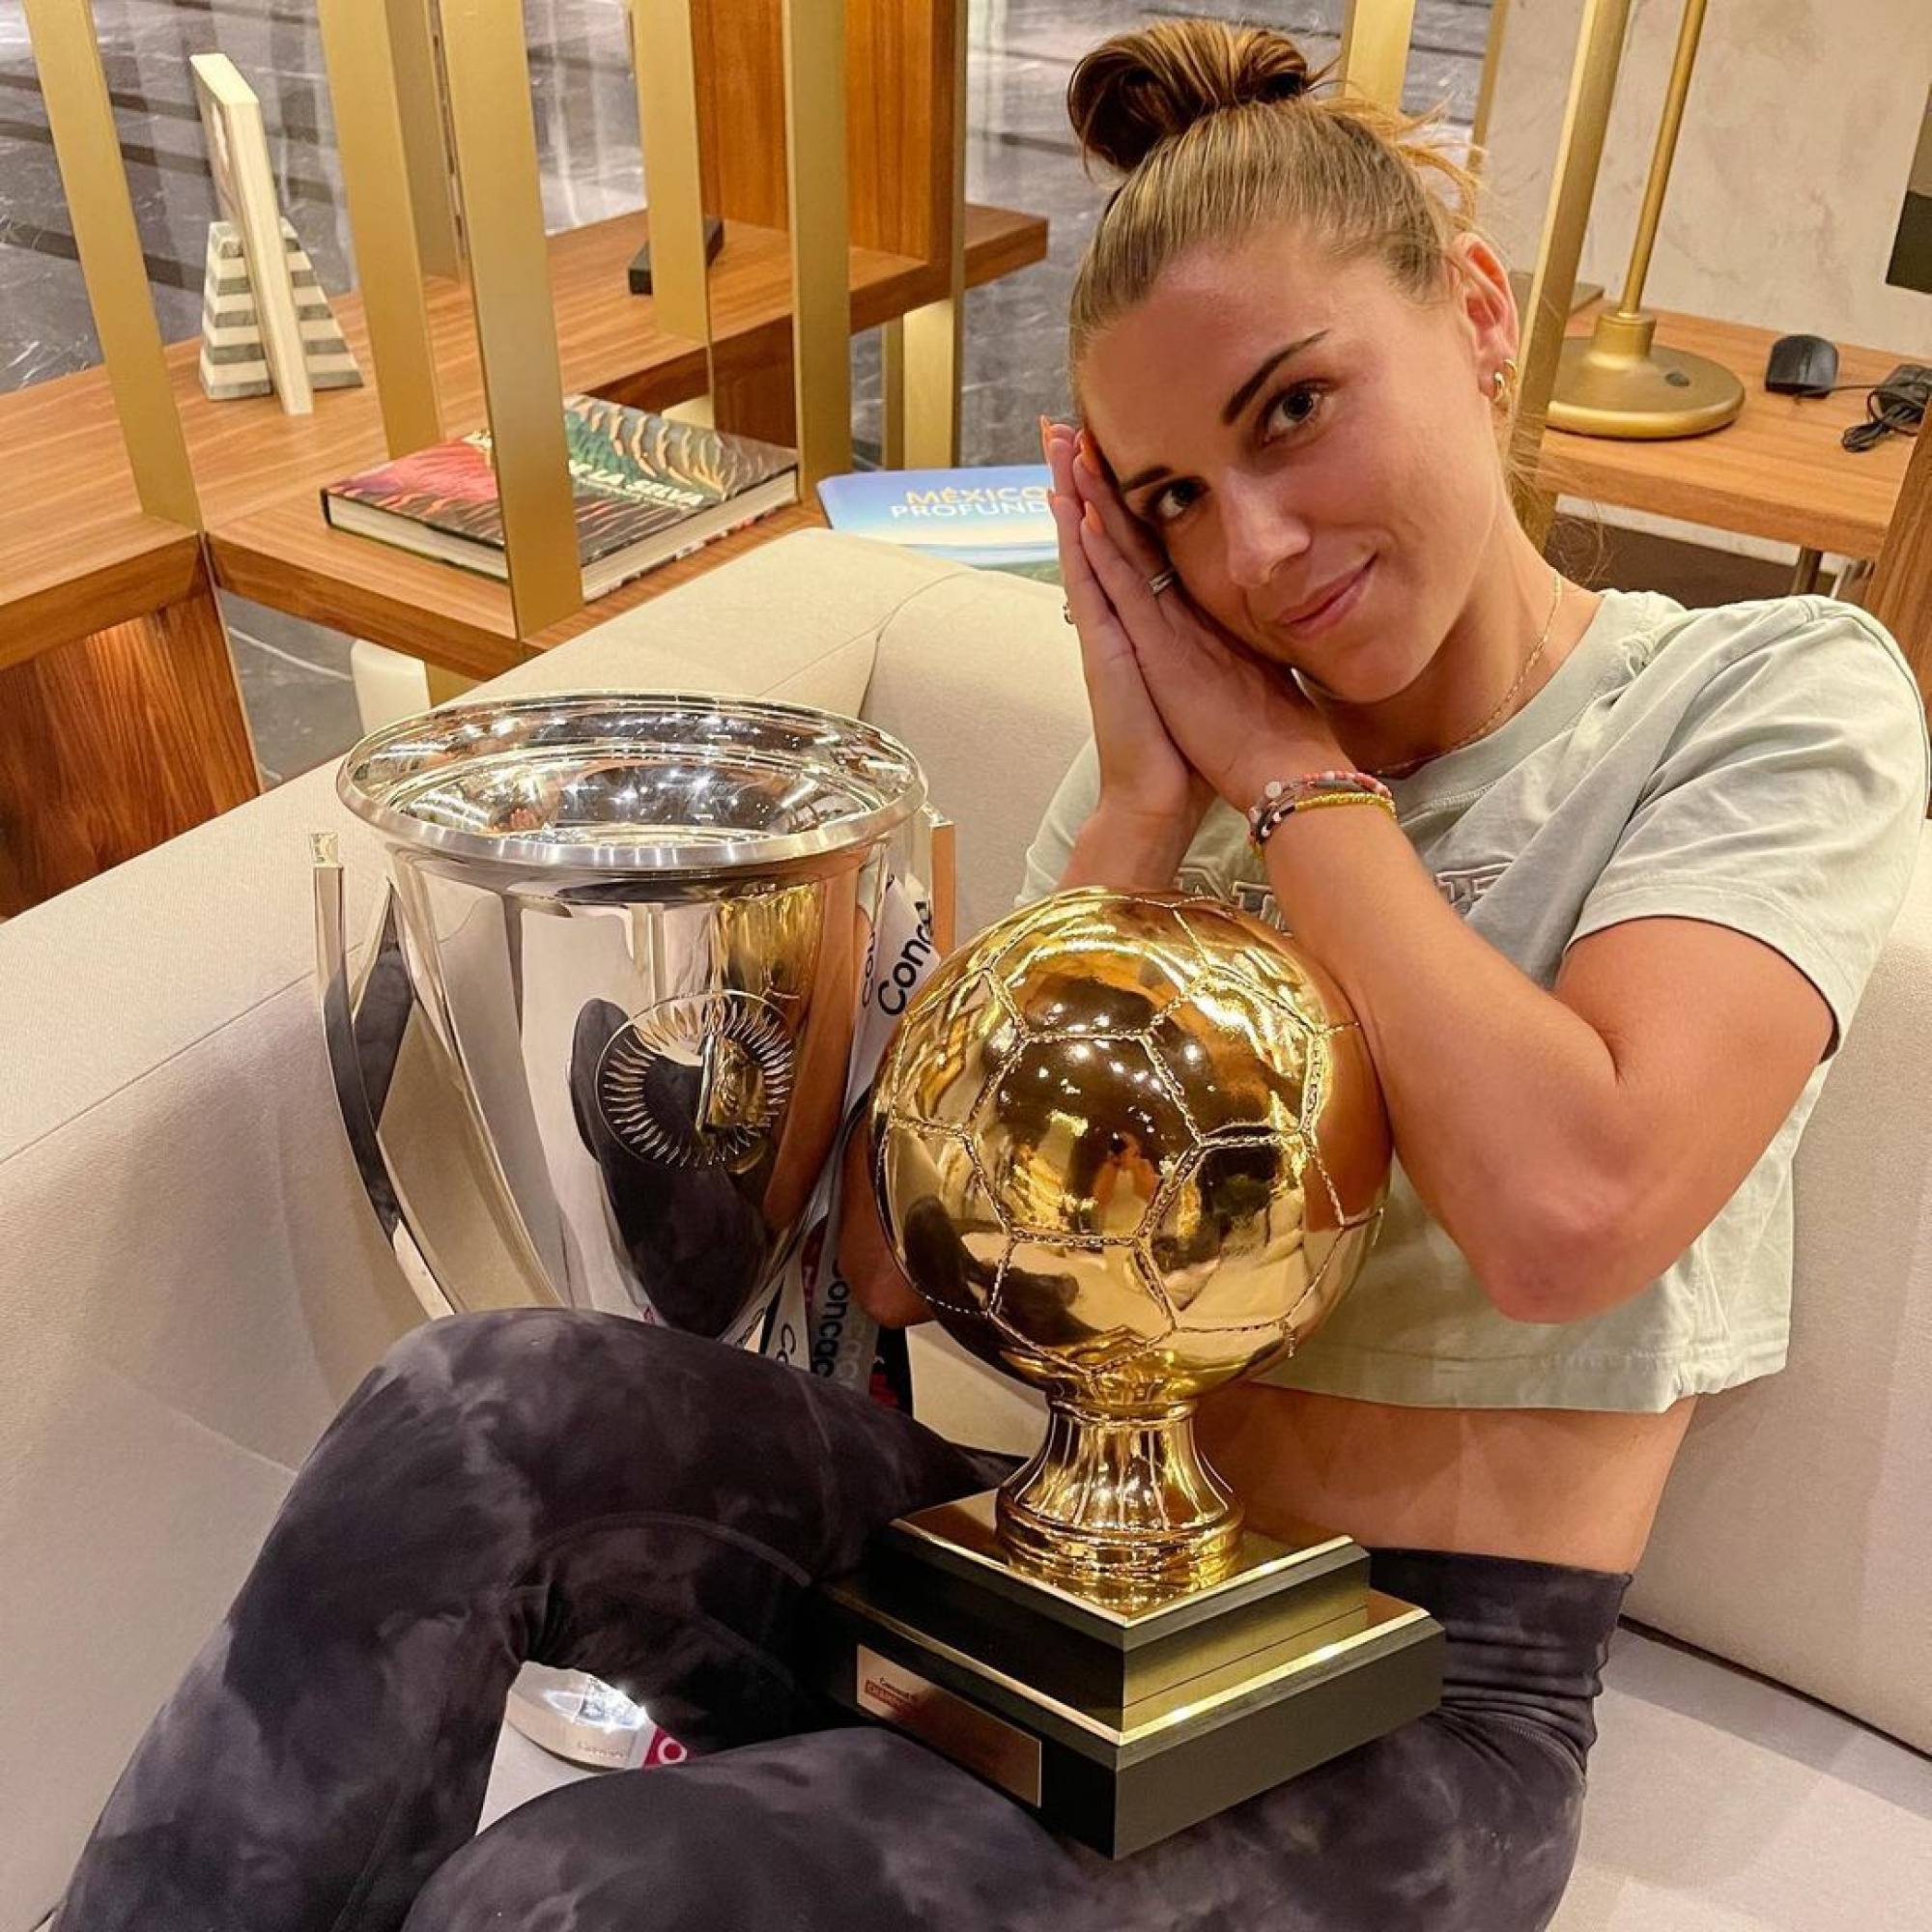 Vuitton Creates Trunks for Ballon d'Or Trophies for Soccer's Best